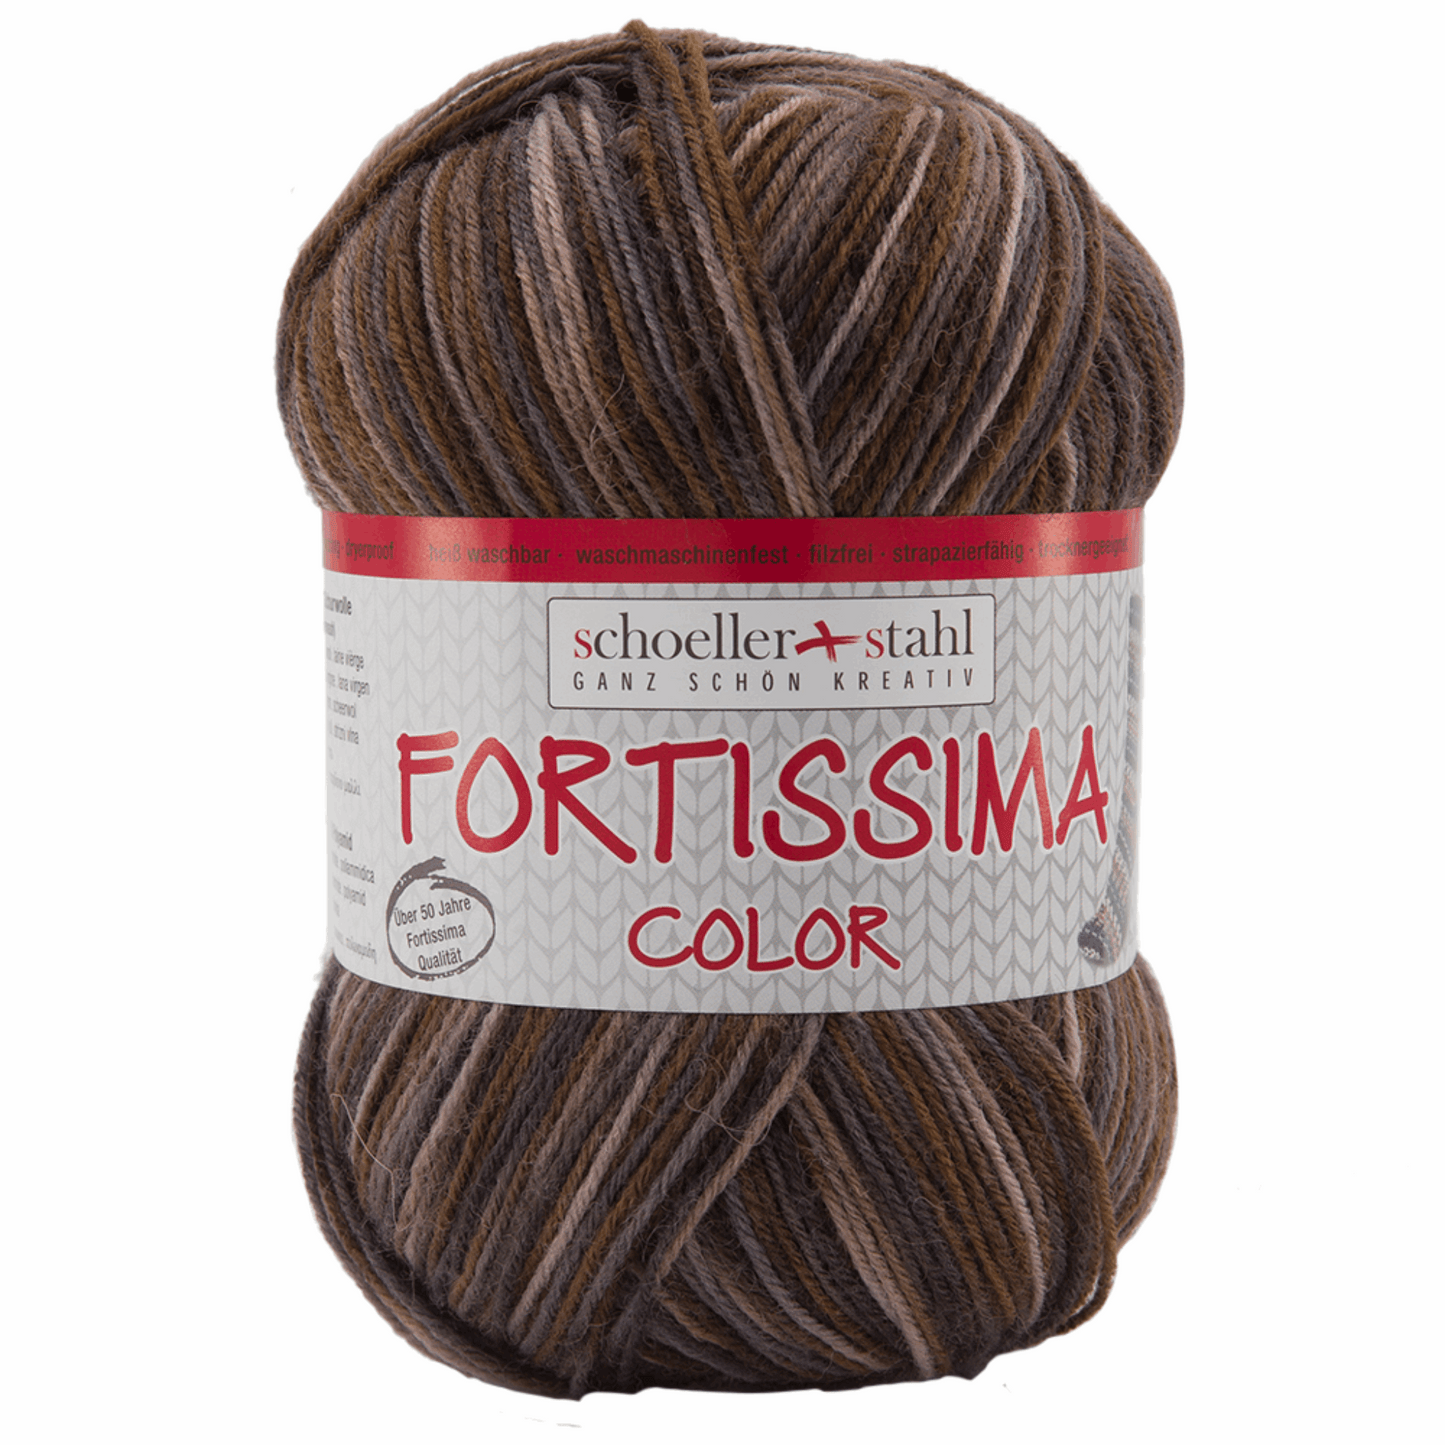 Fortissima socka 4fädig, 90028, Farbe 2446, taupe